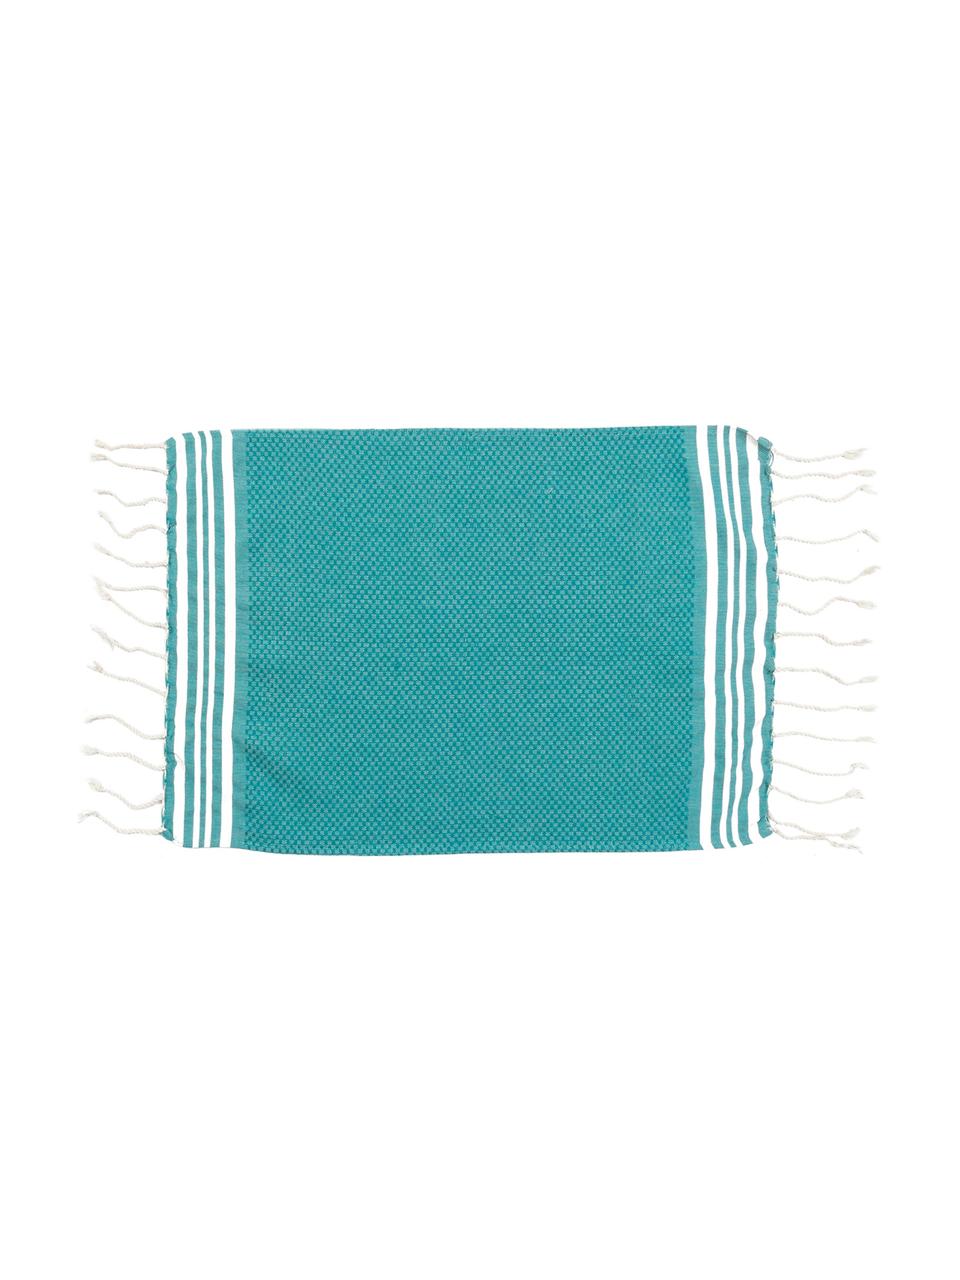 Set de toallas Hamptons, 3 pzas., 100% algodón
Gramaje ligero 200 g/m², Verde turquesa, blanco, Set de diferentes tamaños